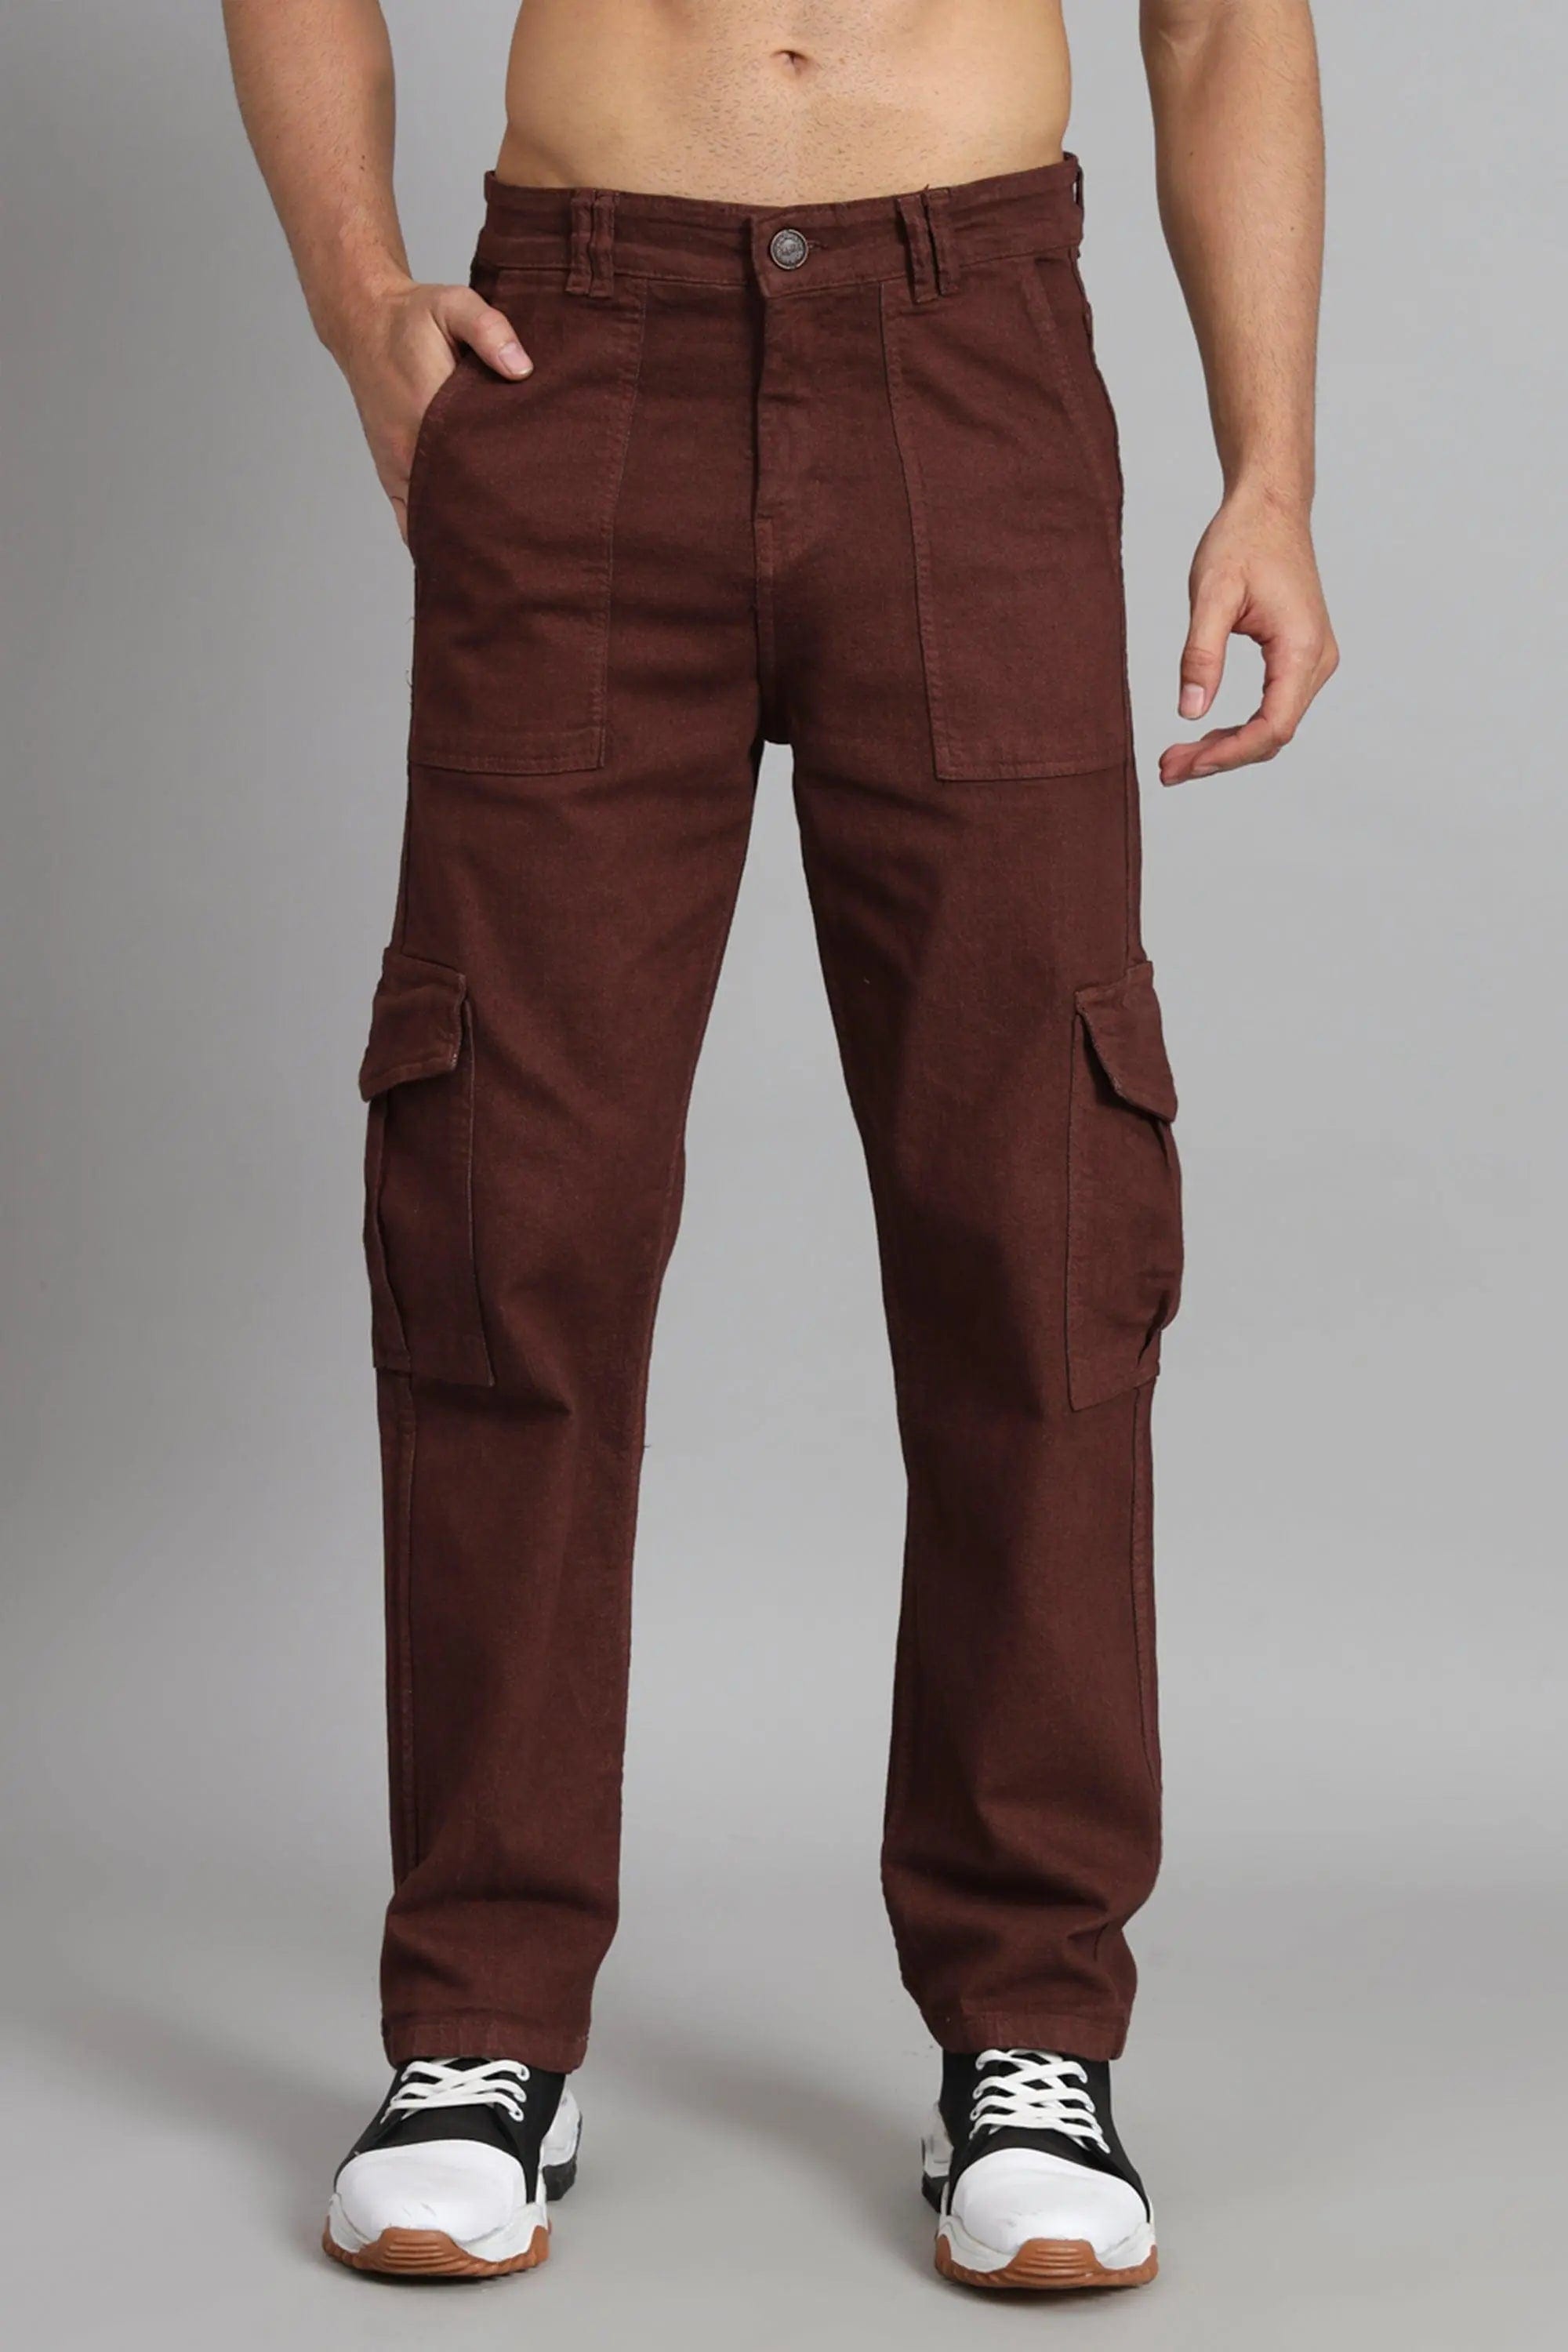 Brown Slim Fit Textured Jeans - Textured Brown Denim Pants - Slim Cut Brown  Jeans | WAM DENIM